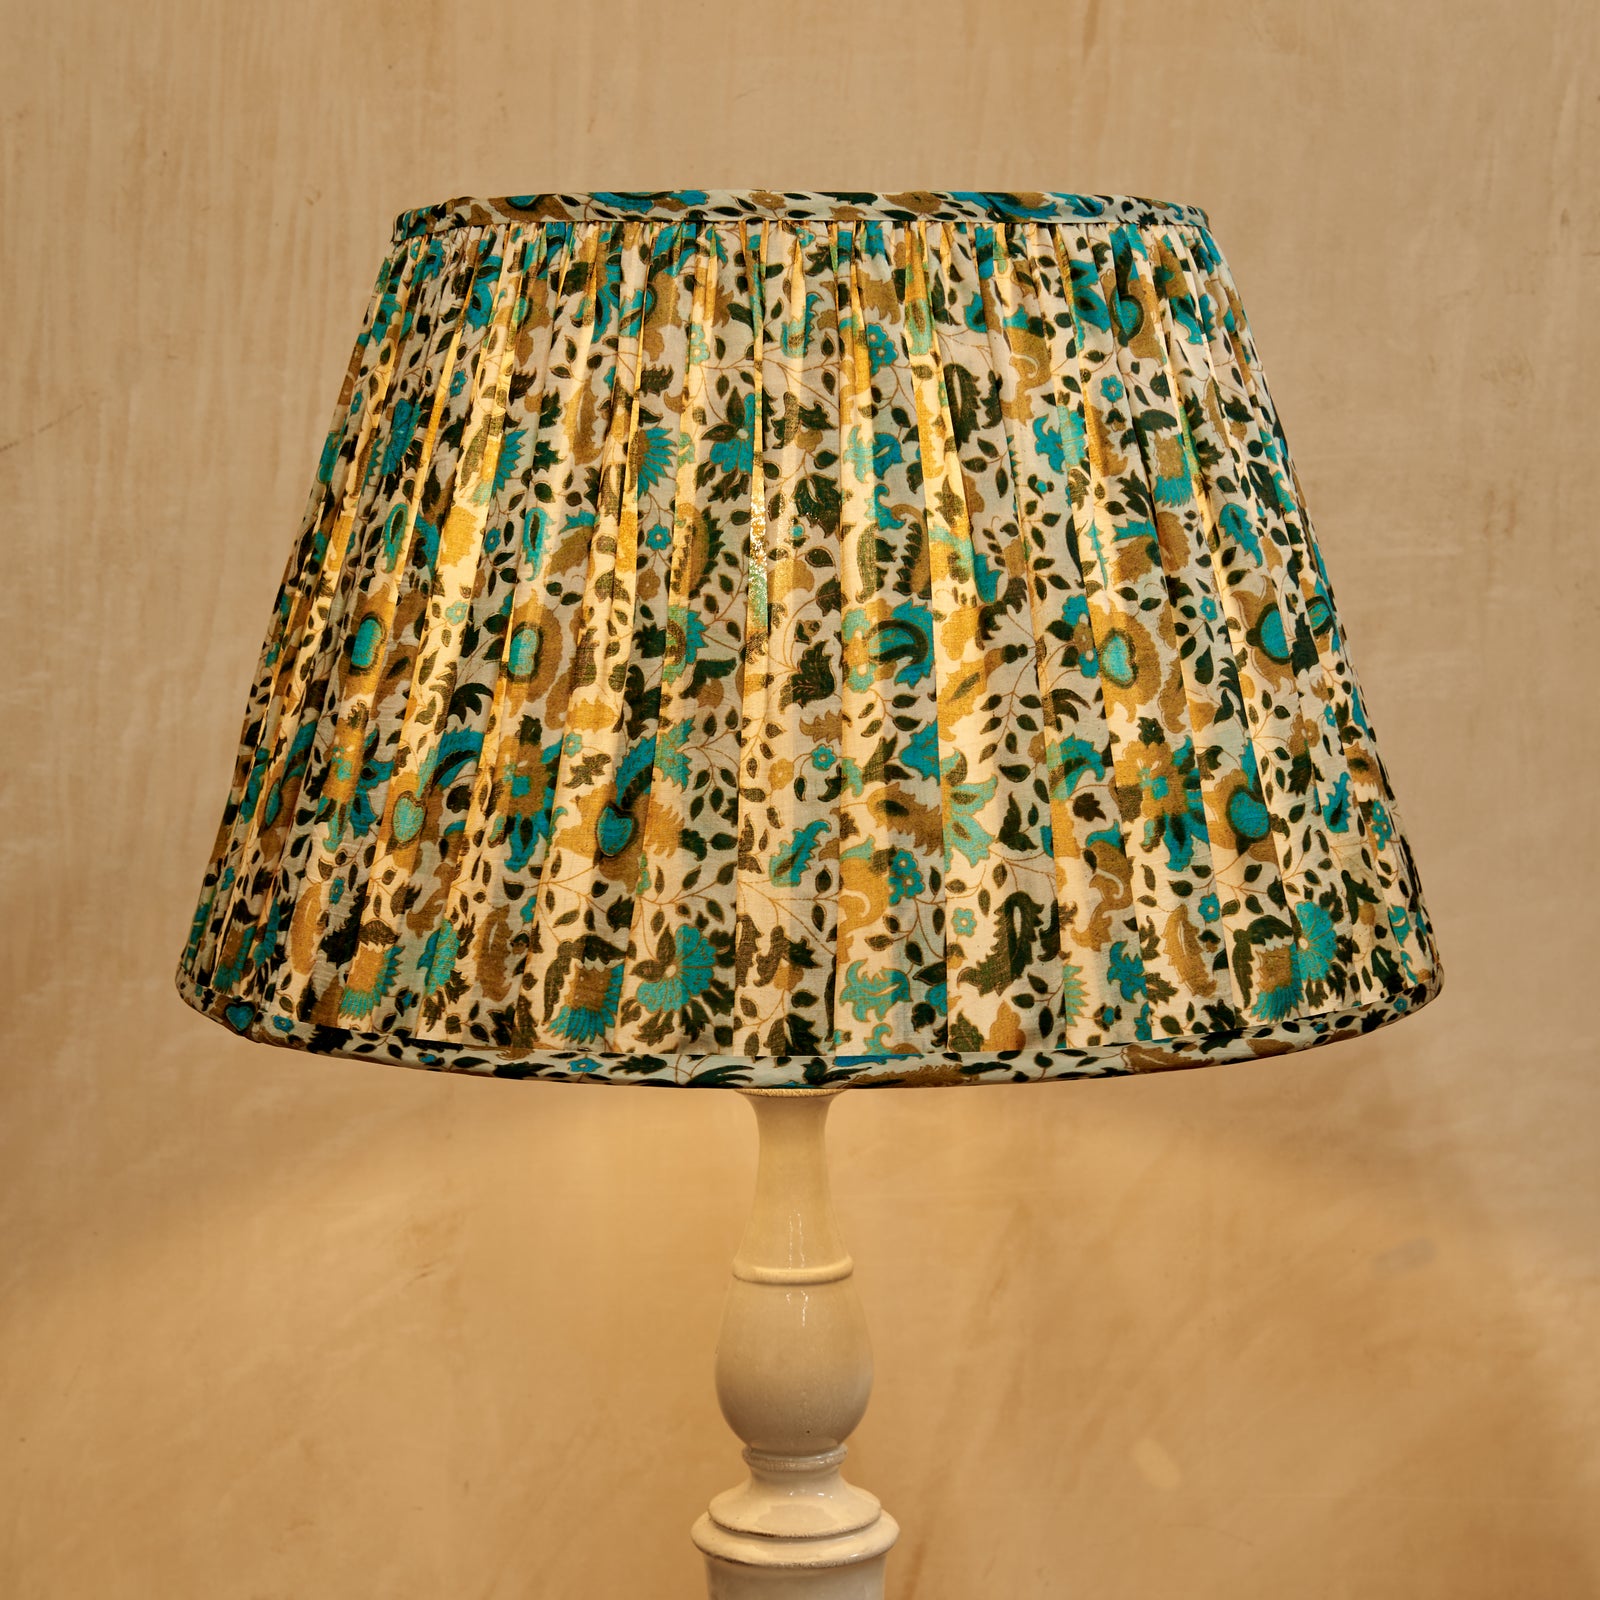 Vintage Sari Lampshade